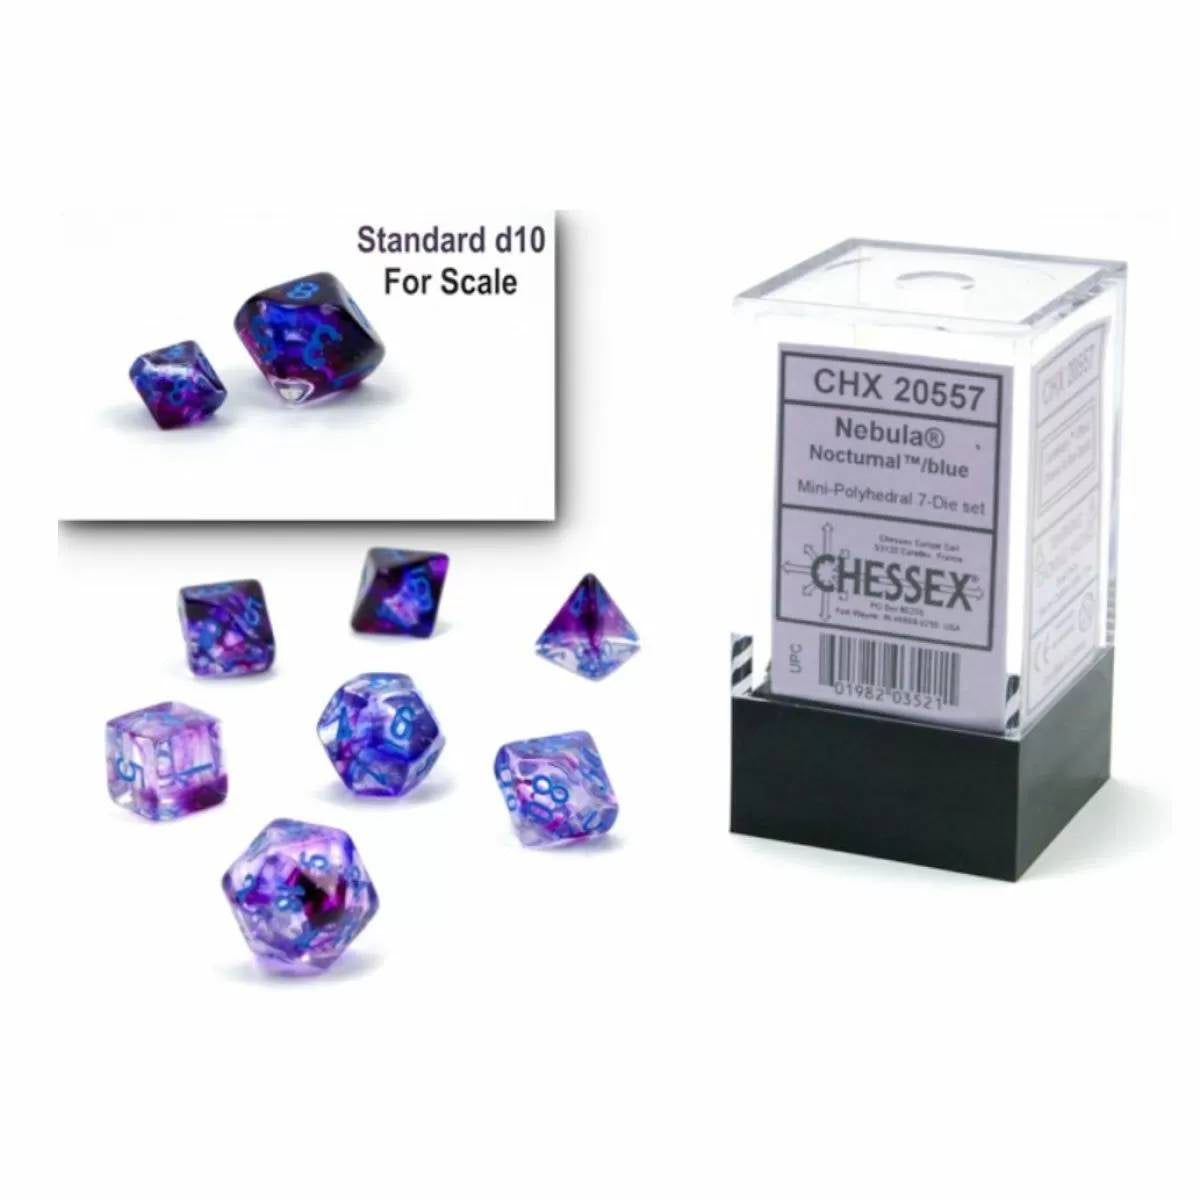 Chessex - Nebula Mini Nocturnal/Blue Luminary 7-Die Set (CHX 20557)